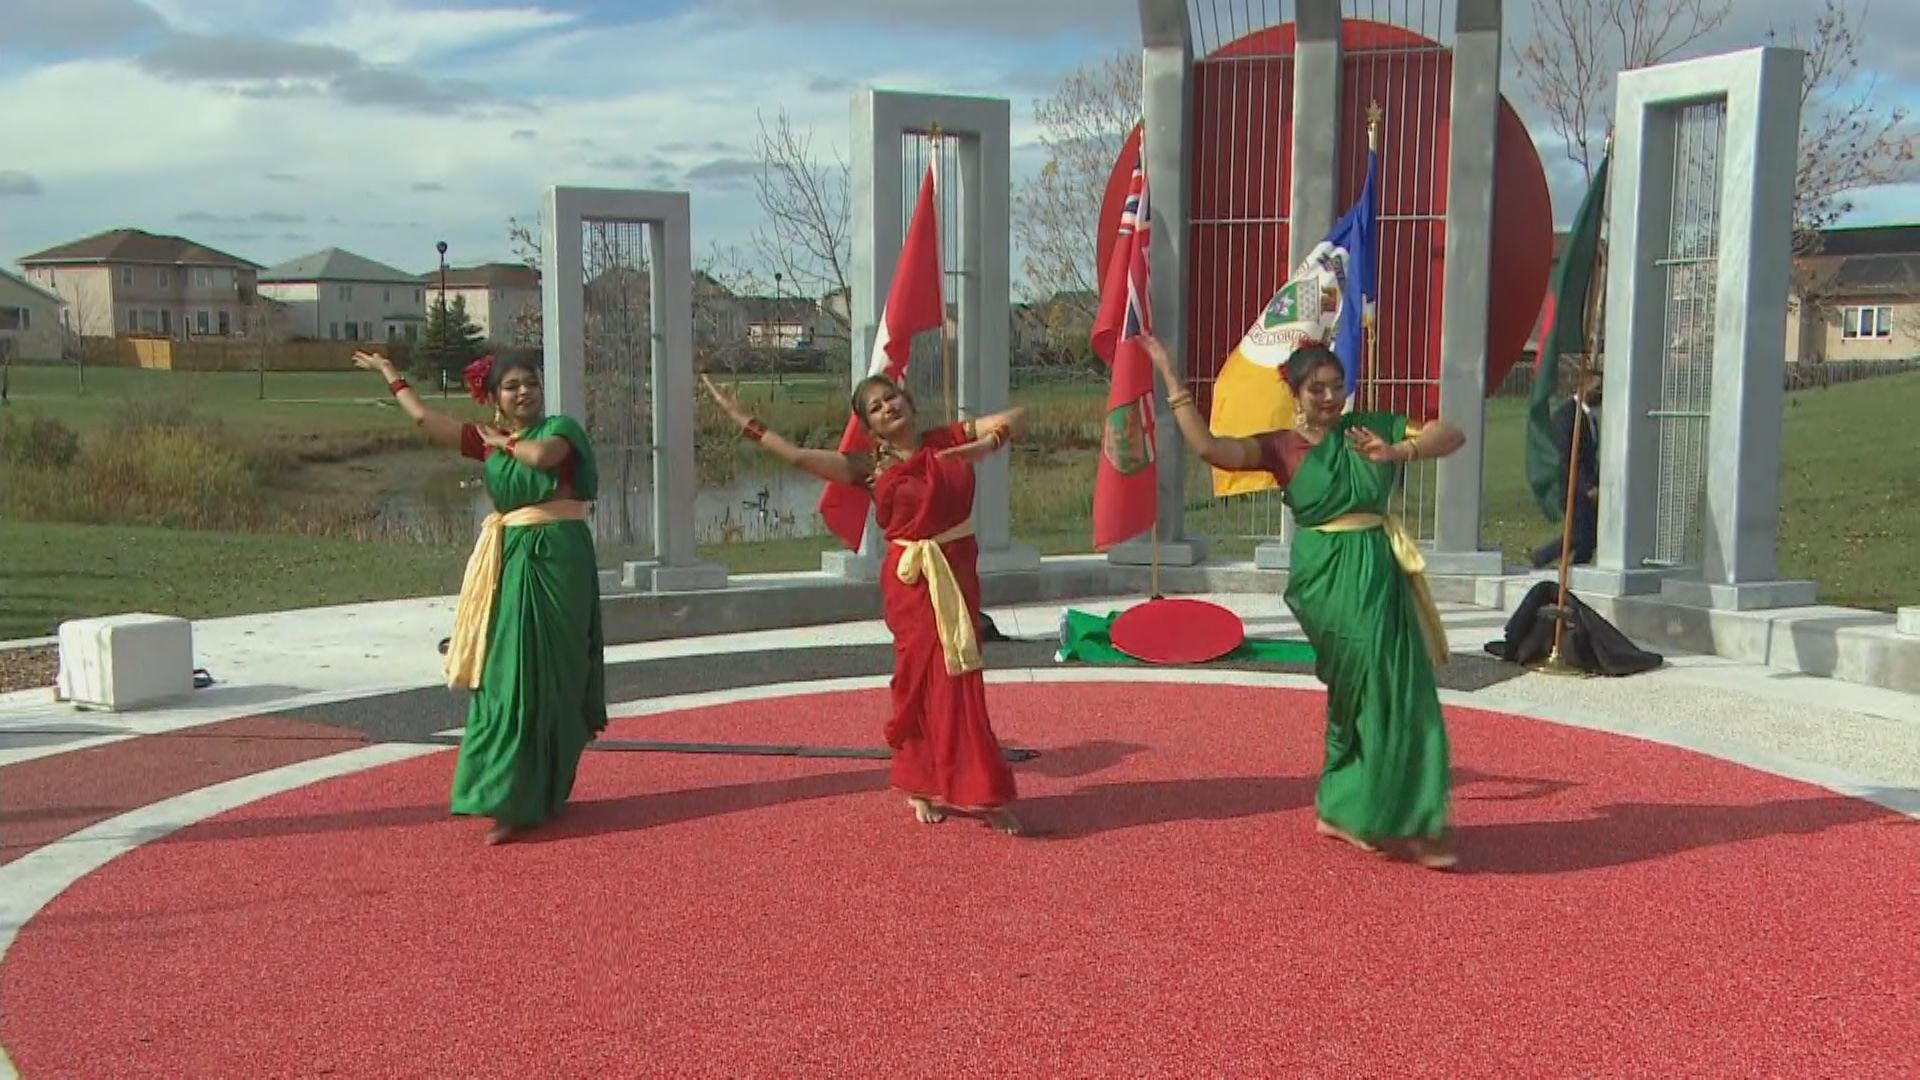 Plaza celebrating diverse languages opens at Winnipeg park